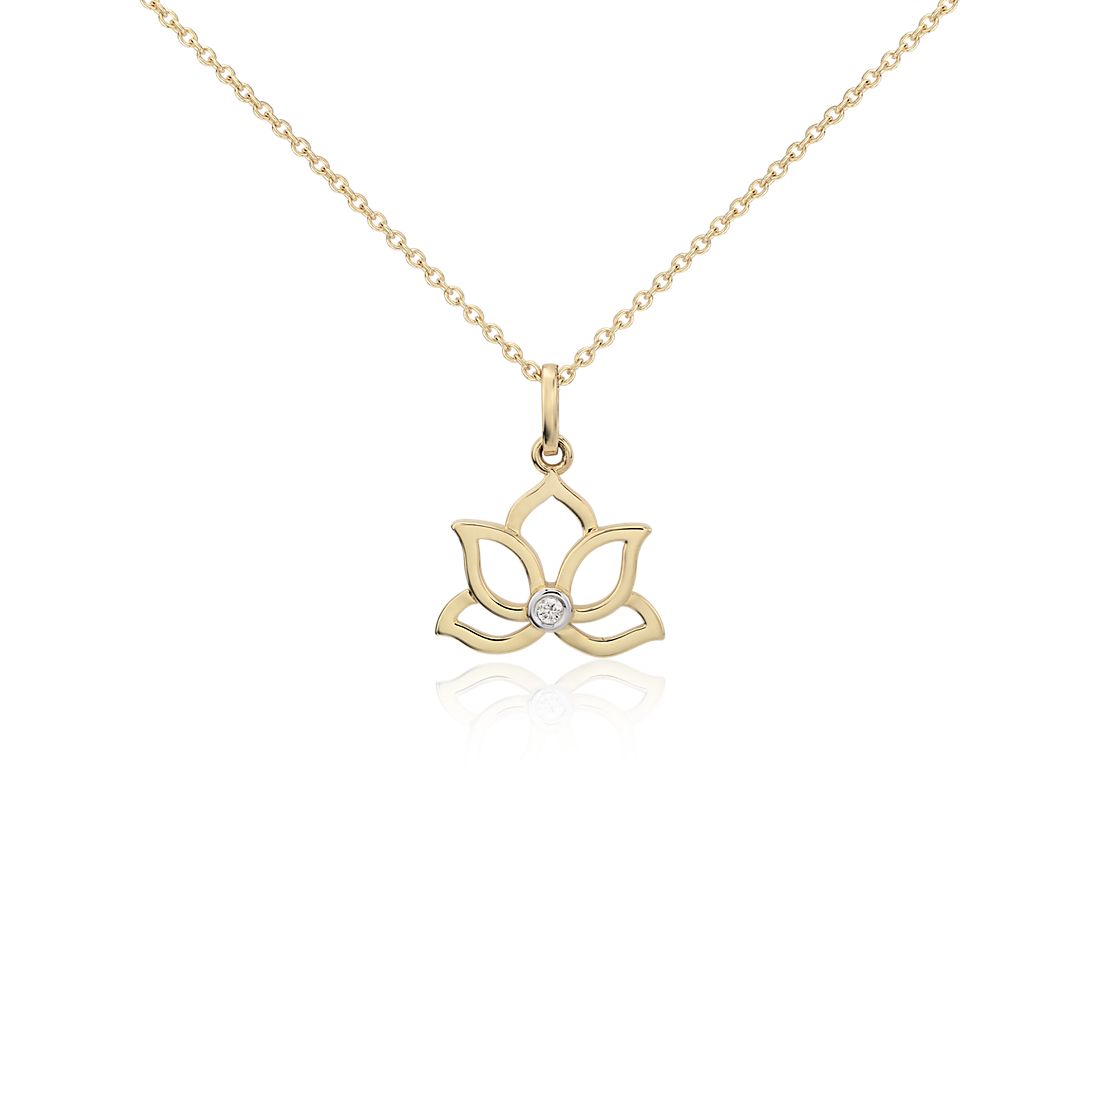 Gold lotus necklace walmart com online shopping